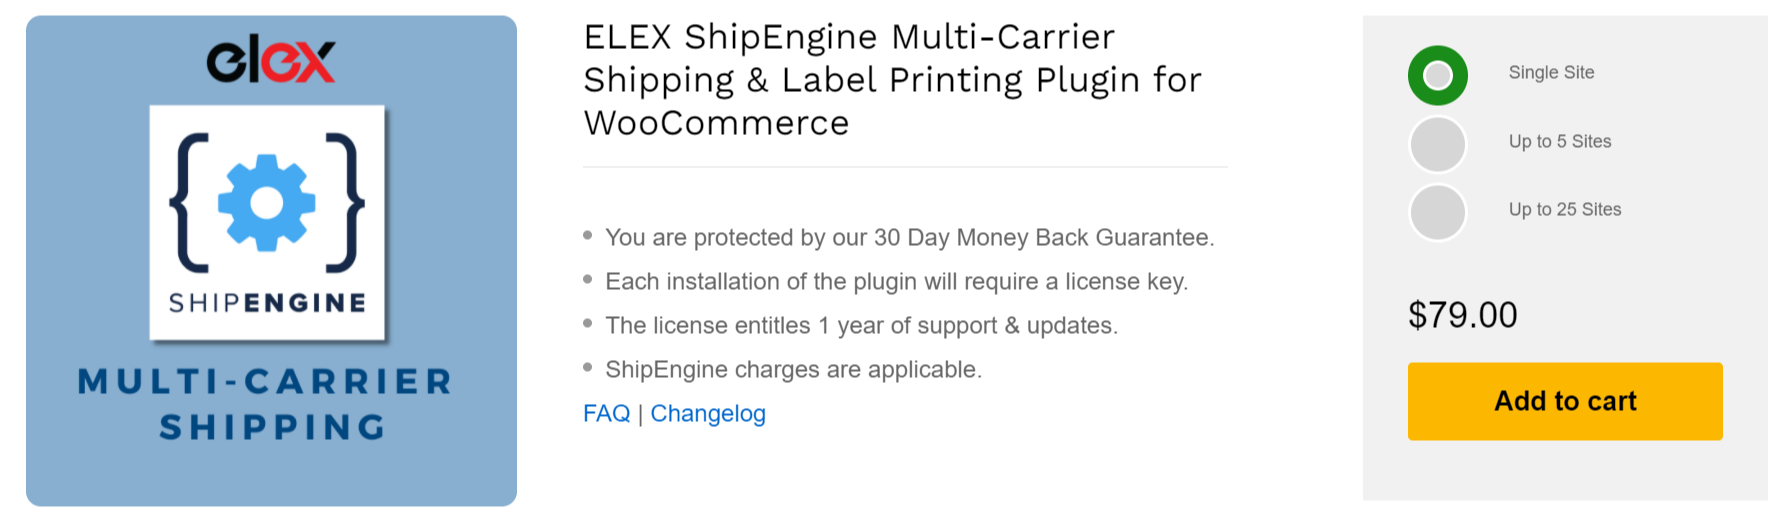 ELEX ShipEngine Multi-Carrier Shipping & Label Printing Plugin